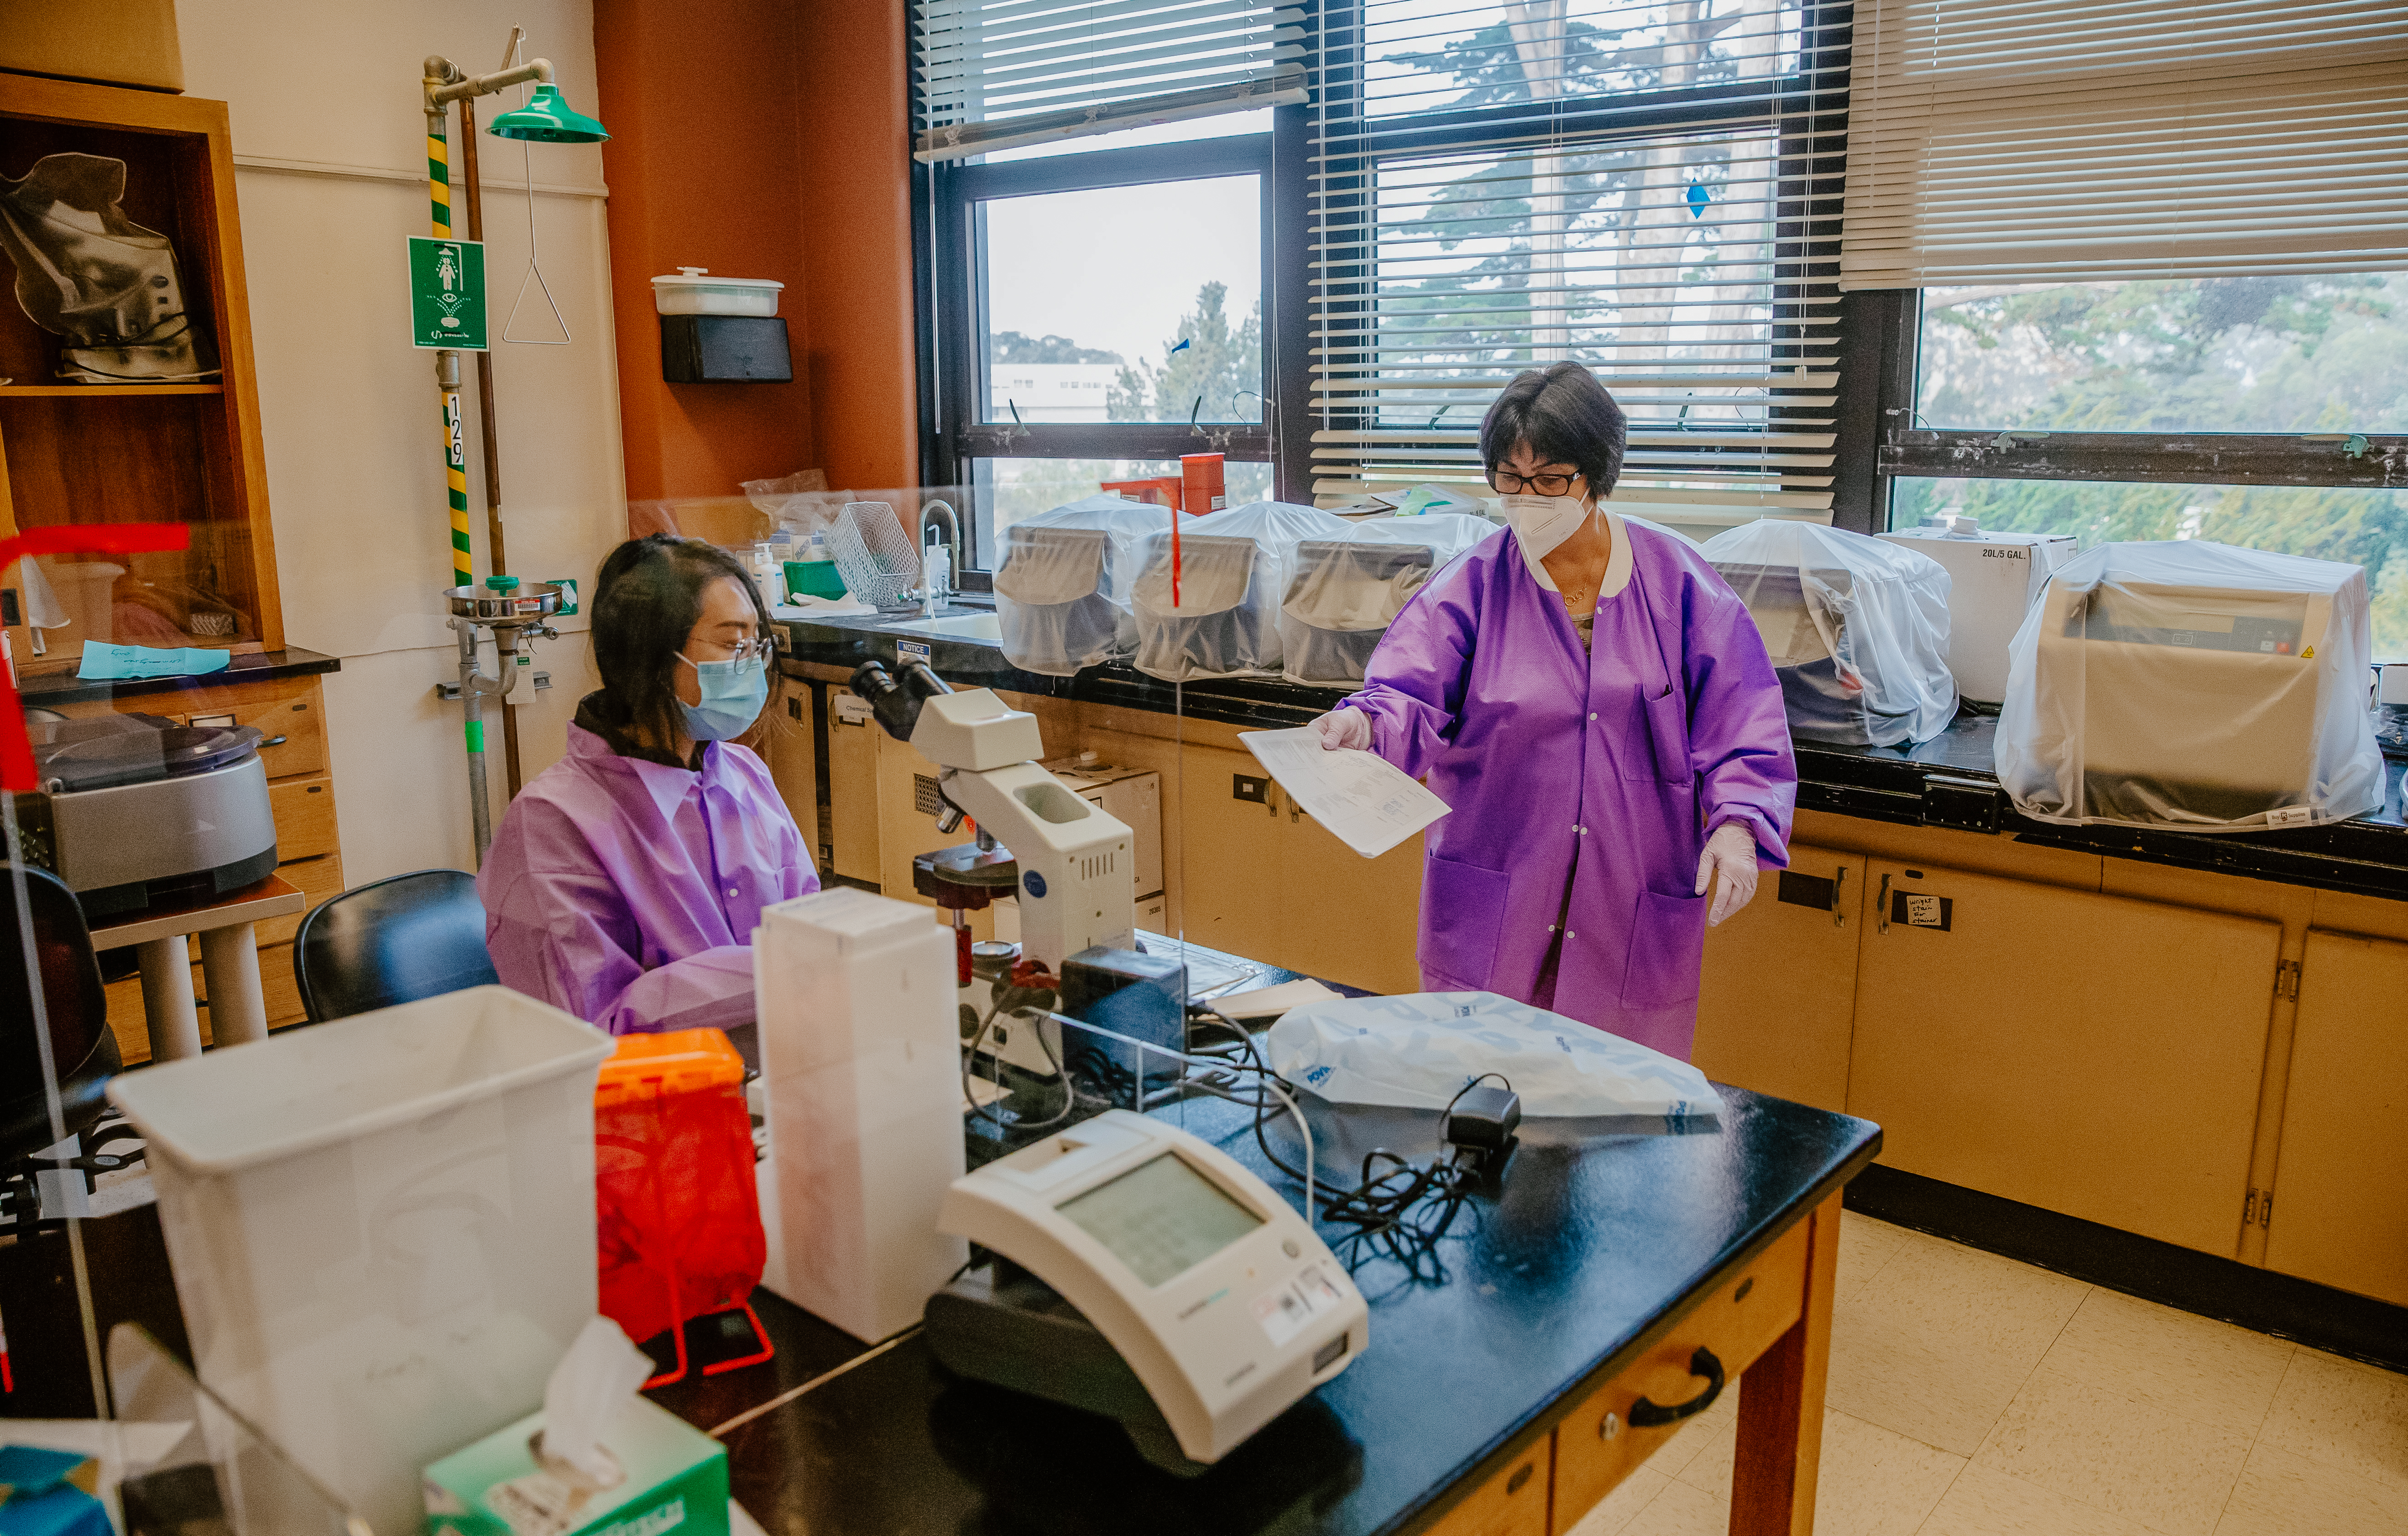 Two people in a lab wearing purple coats.